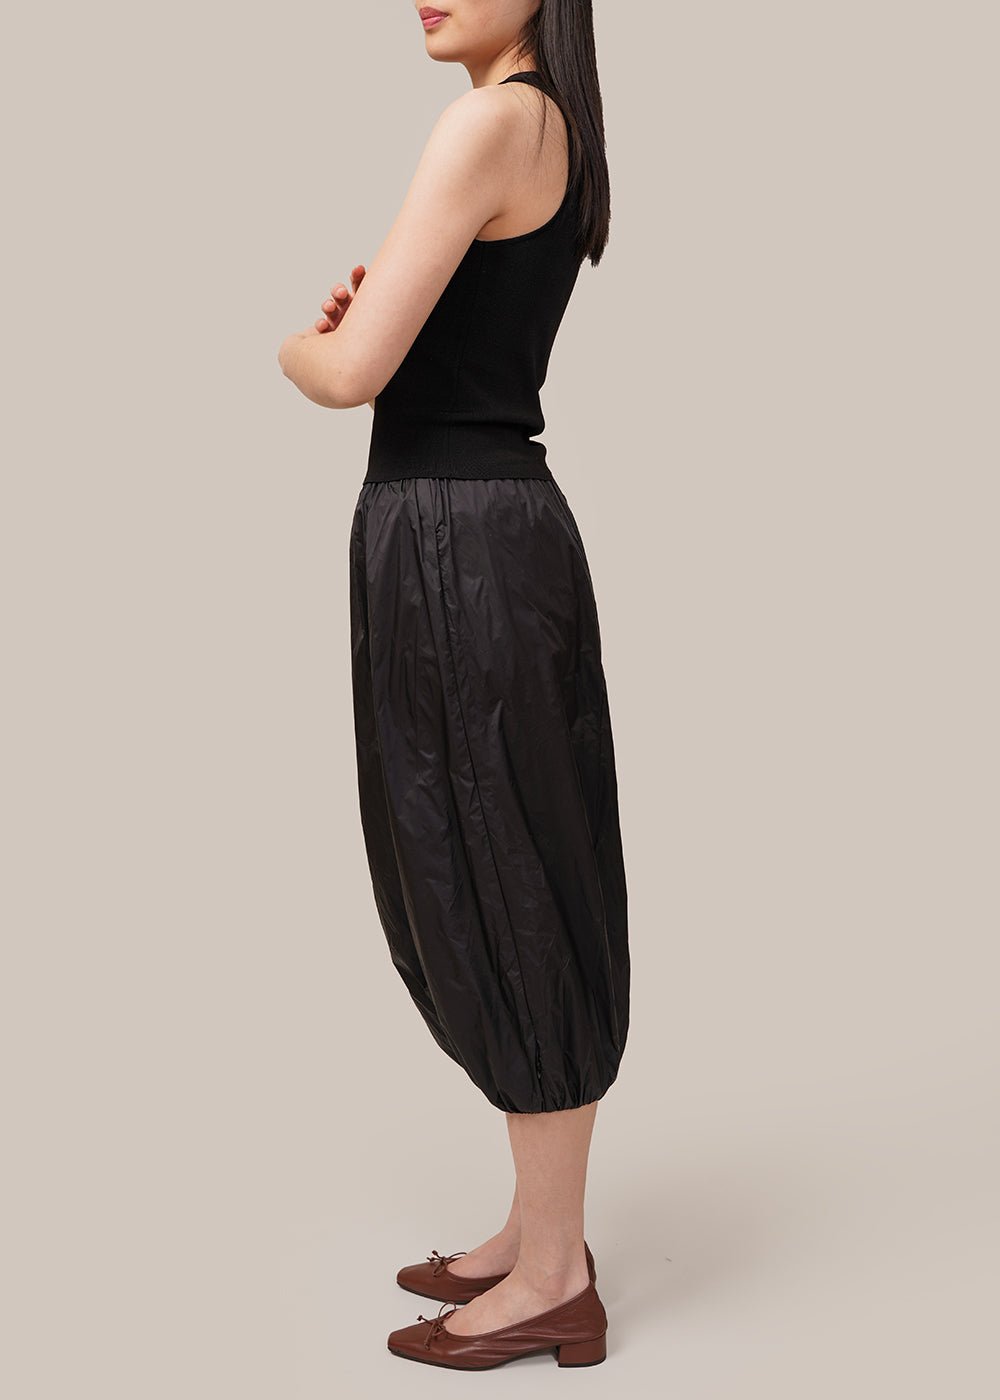 AMOMENTO Black Volume Shirring Mini Dress/Bolero - New Classics Studios Sustainable Ethical Fashion Canada